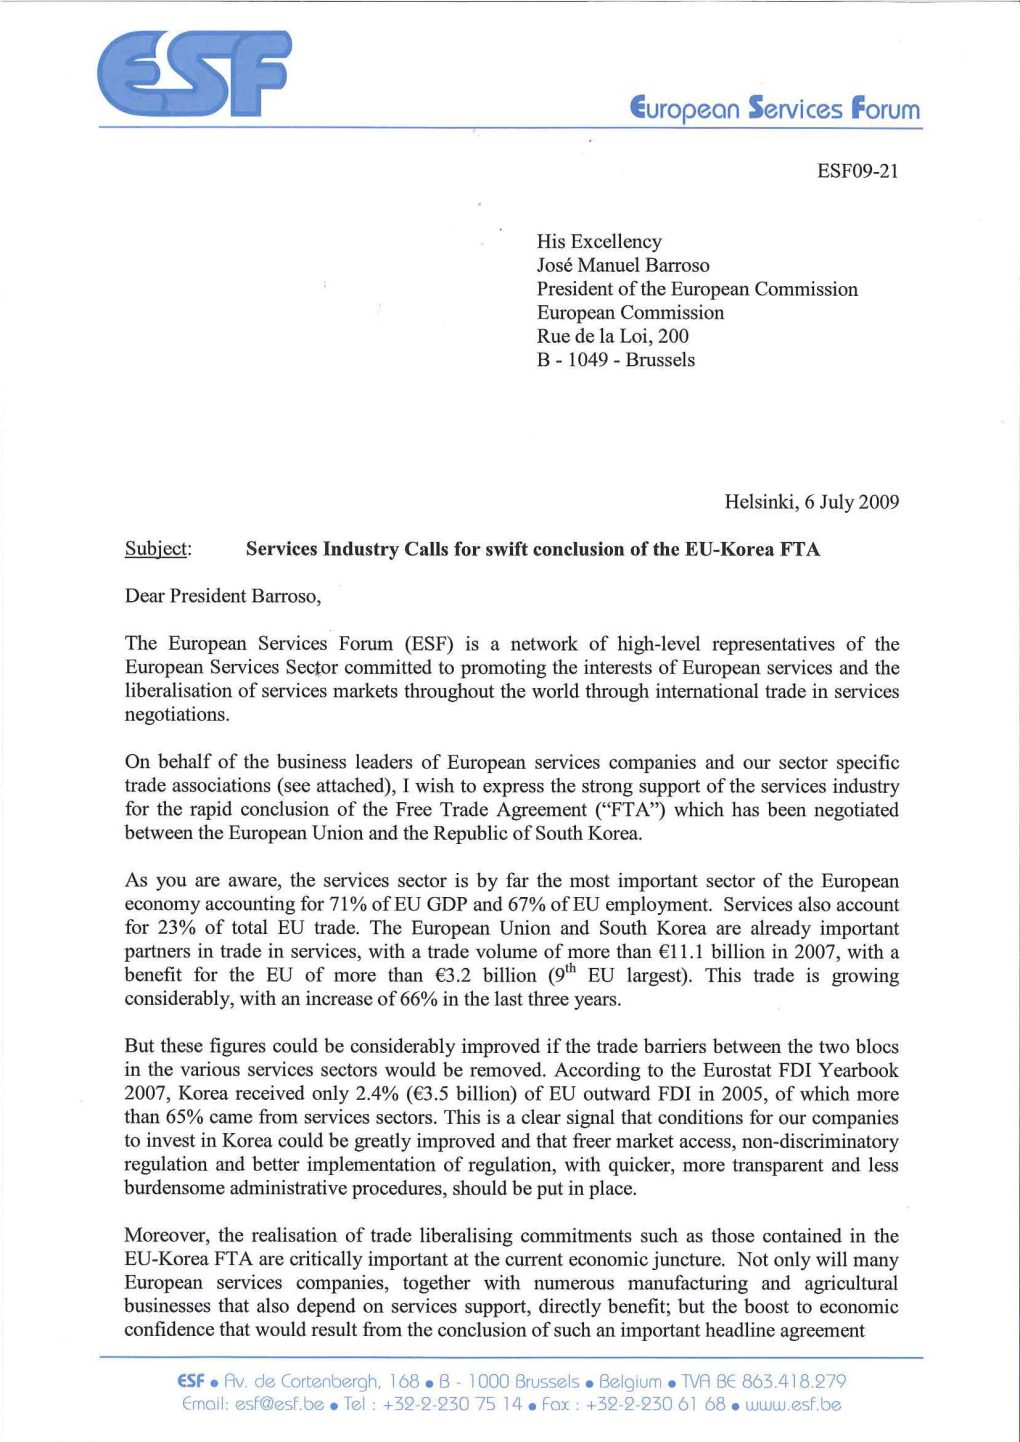 ESF Chairman Letter to European